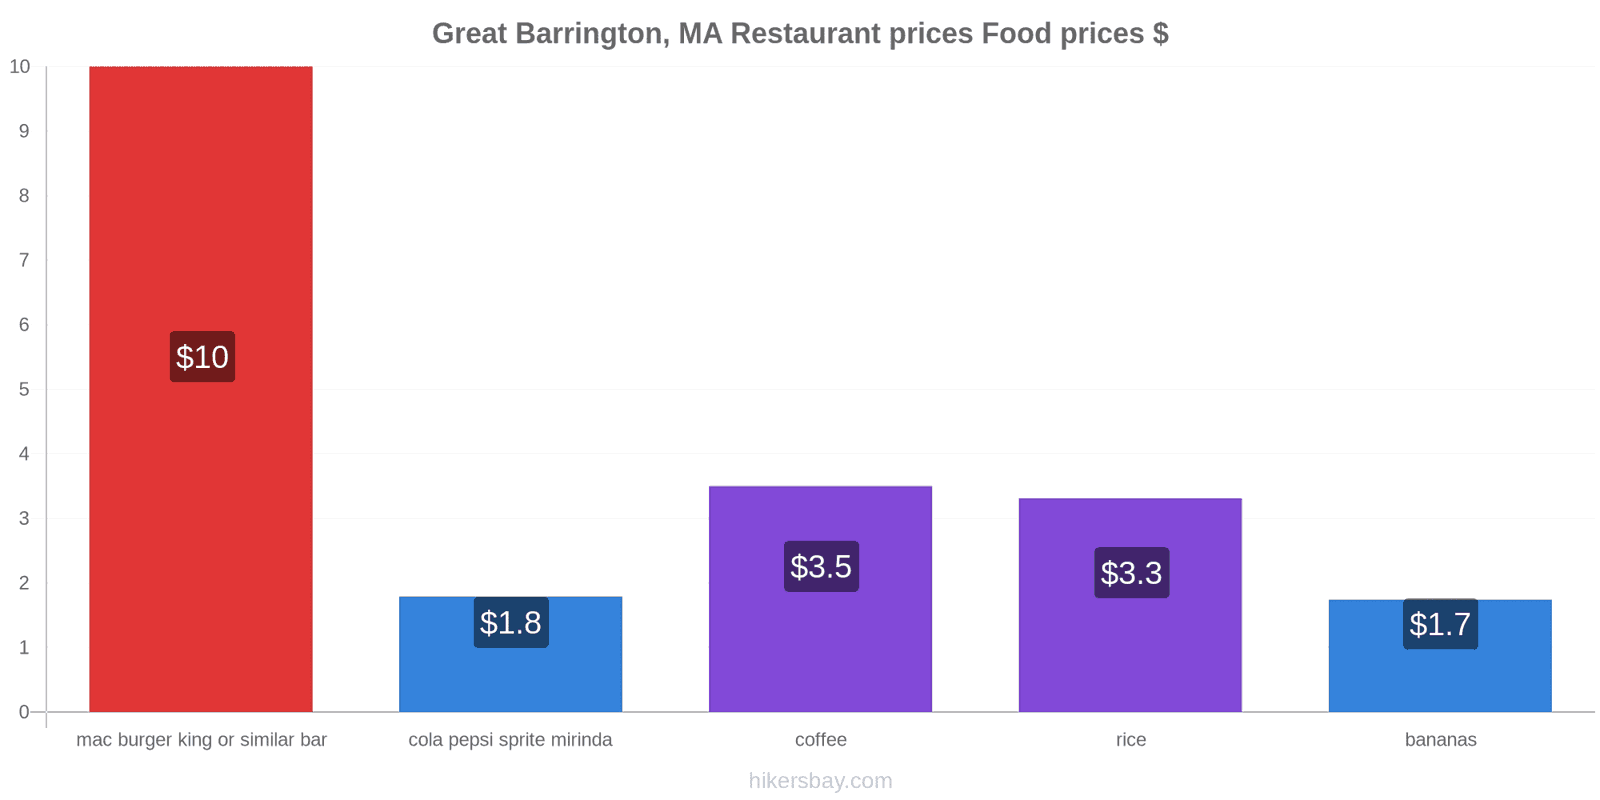 Great Barrington, MA price changes hikersbay.com